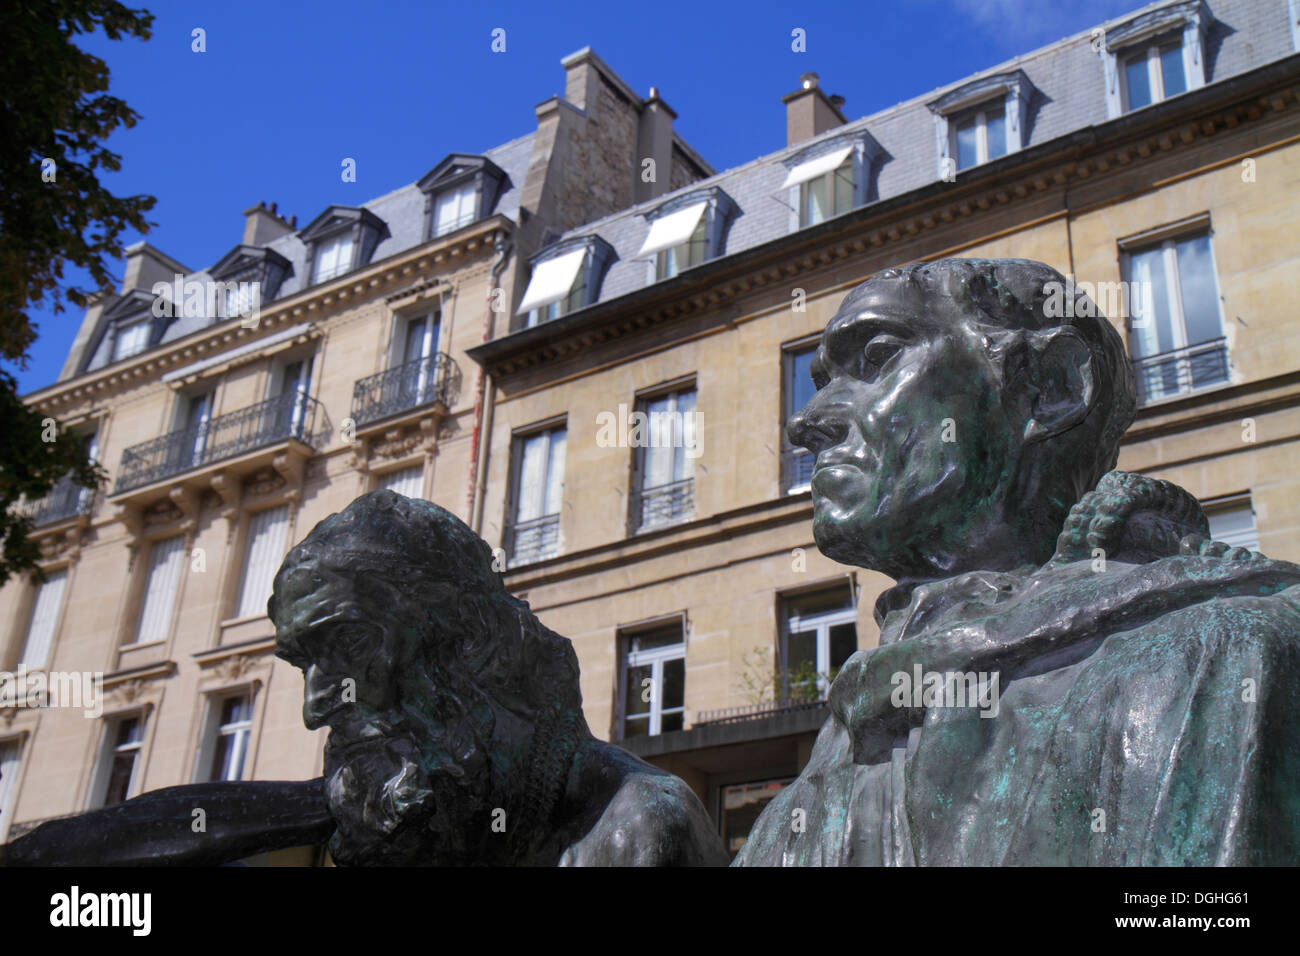 Paris France,7th arrondissement,Musée Rodin,Rodin Museum,garden,grounds,art sculpture,detail,man men male,France130818092 Stock Photo